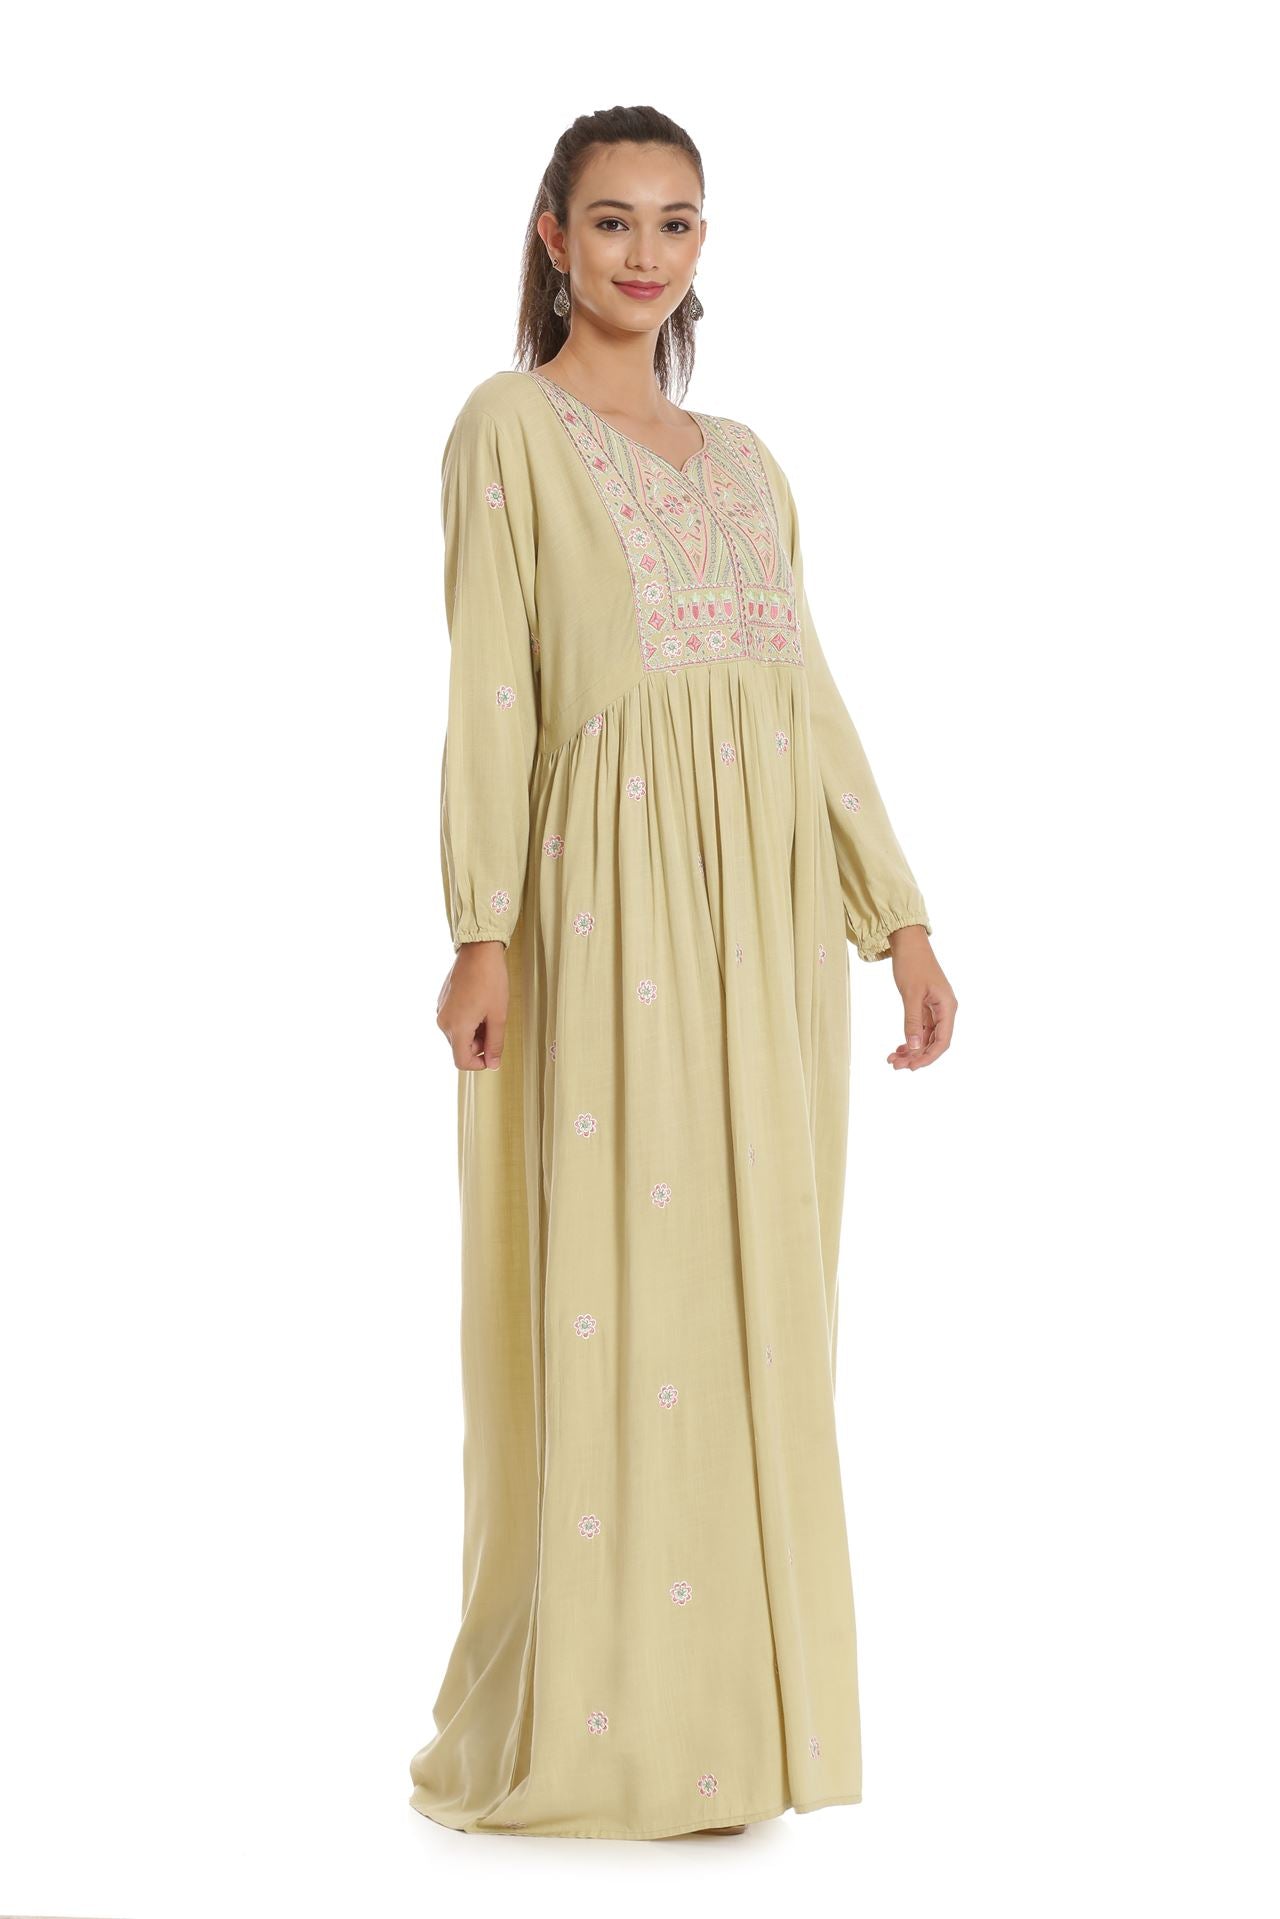 Arabian Boho Evening Party Gown - Maxim Creation